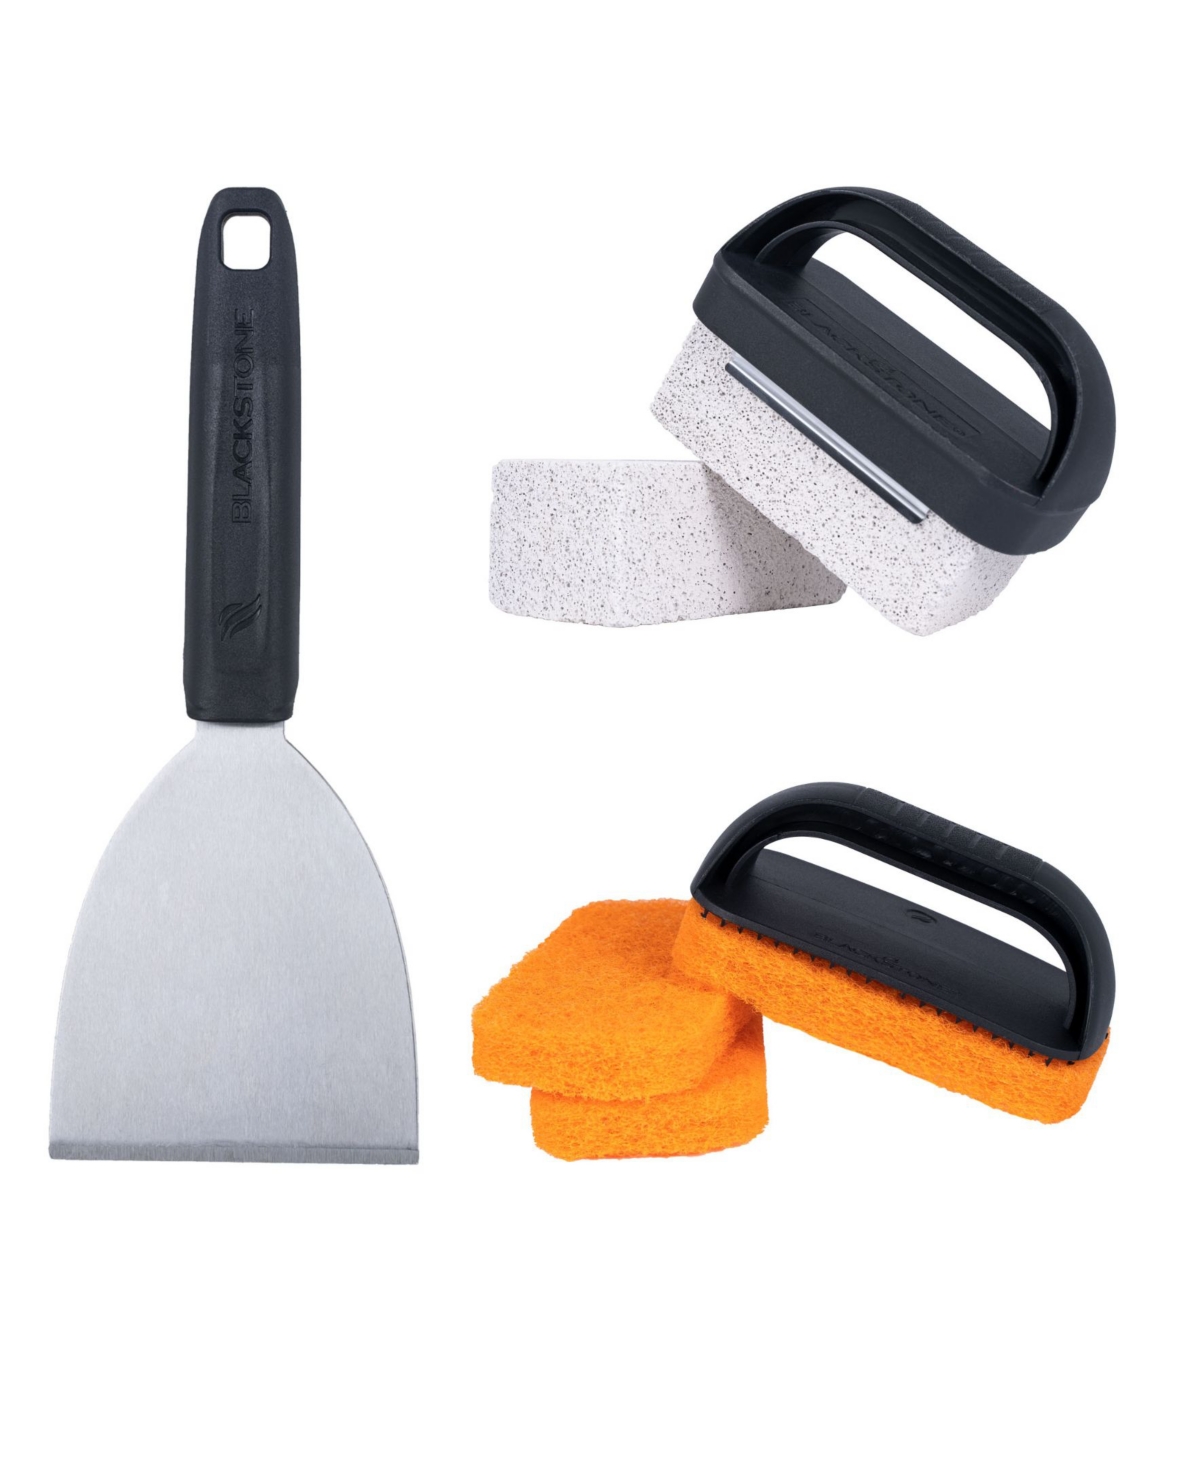 Griddle Cleaning Kit - Black